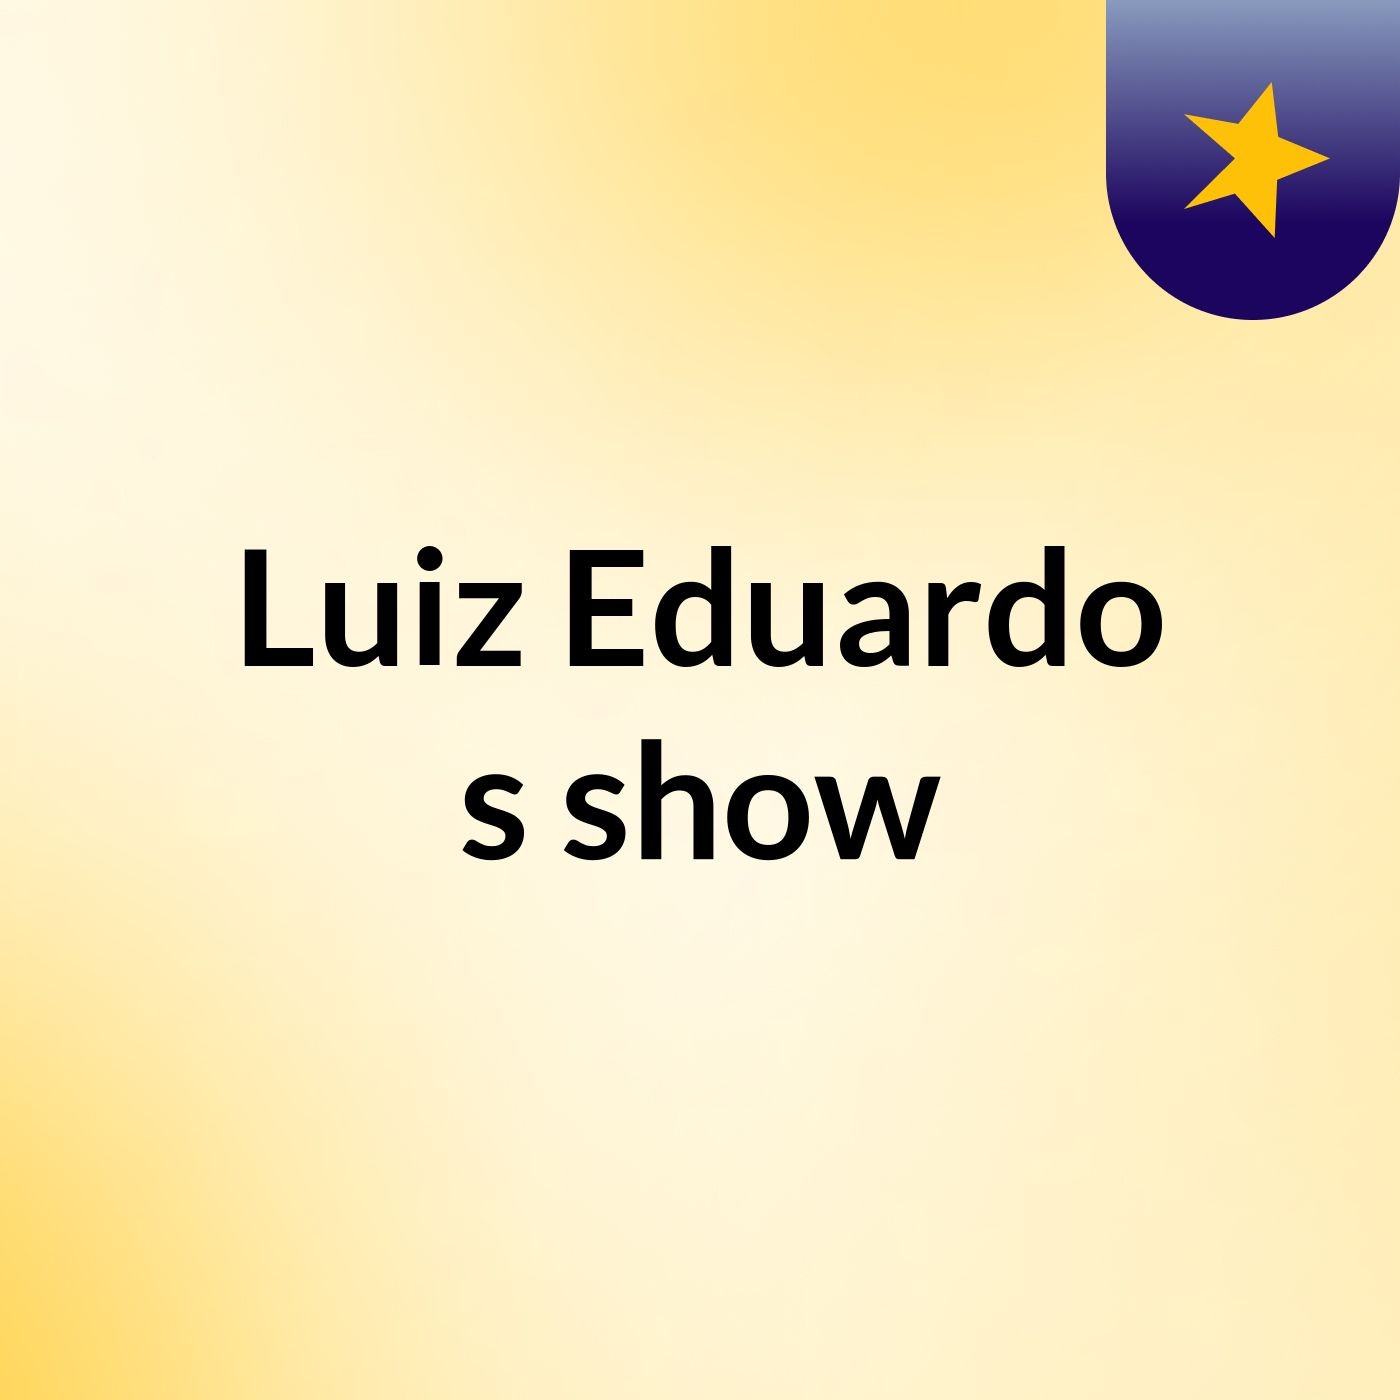 Luiz Eduardo's show